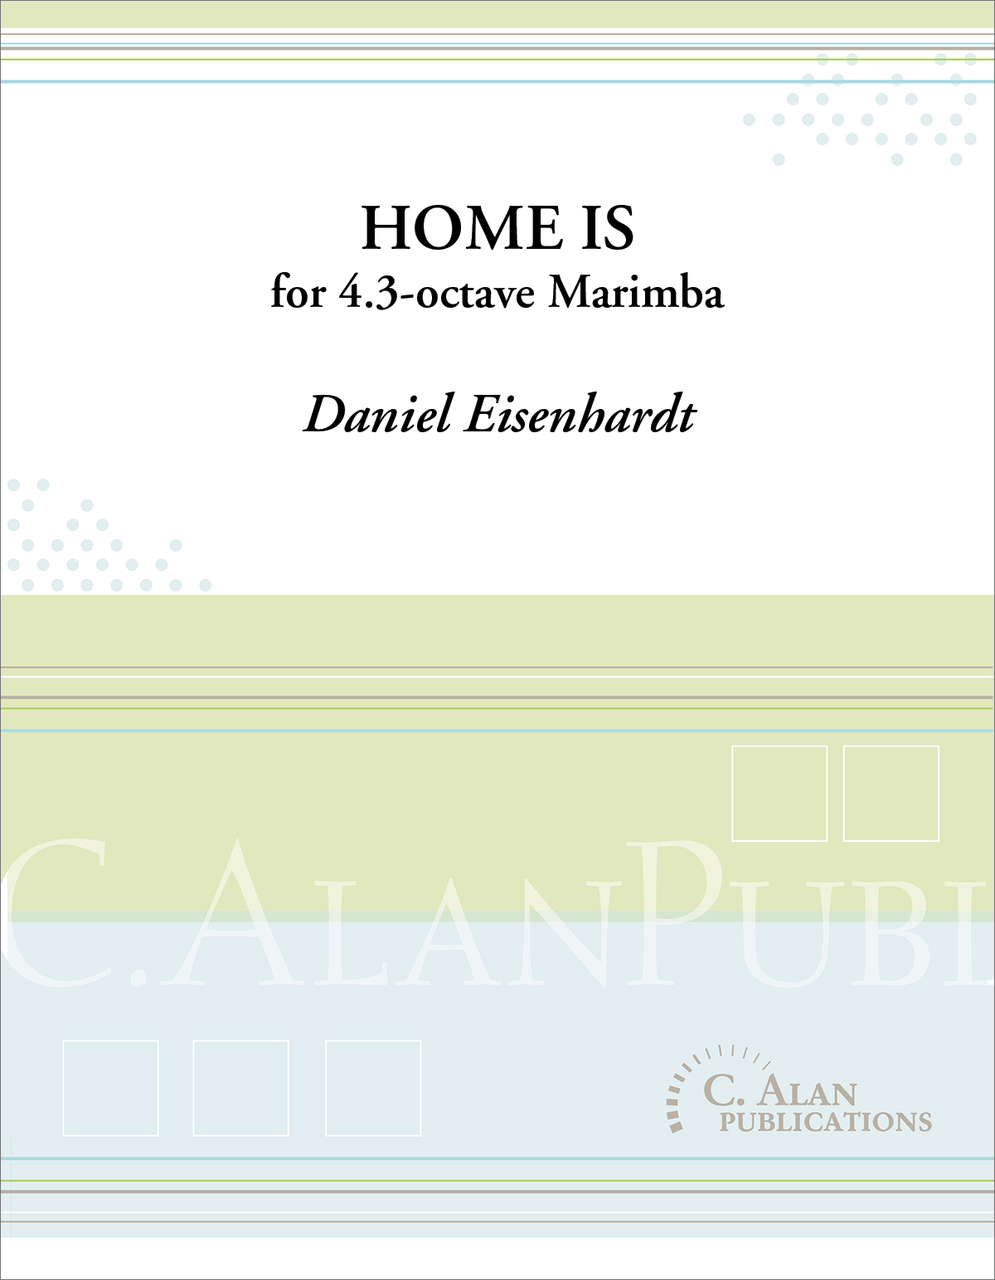 Home Is by Daniel Eisenhardt